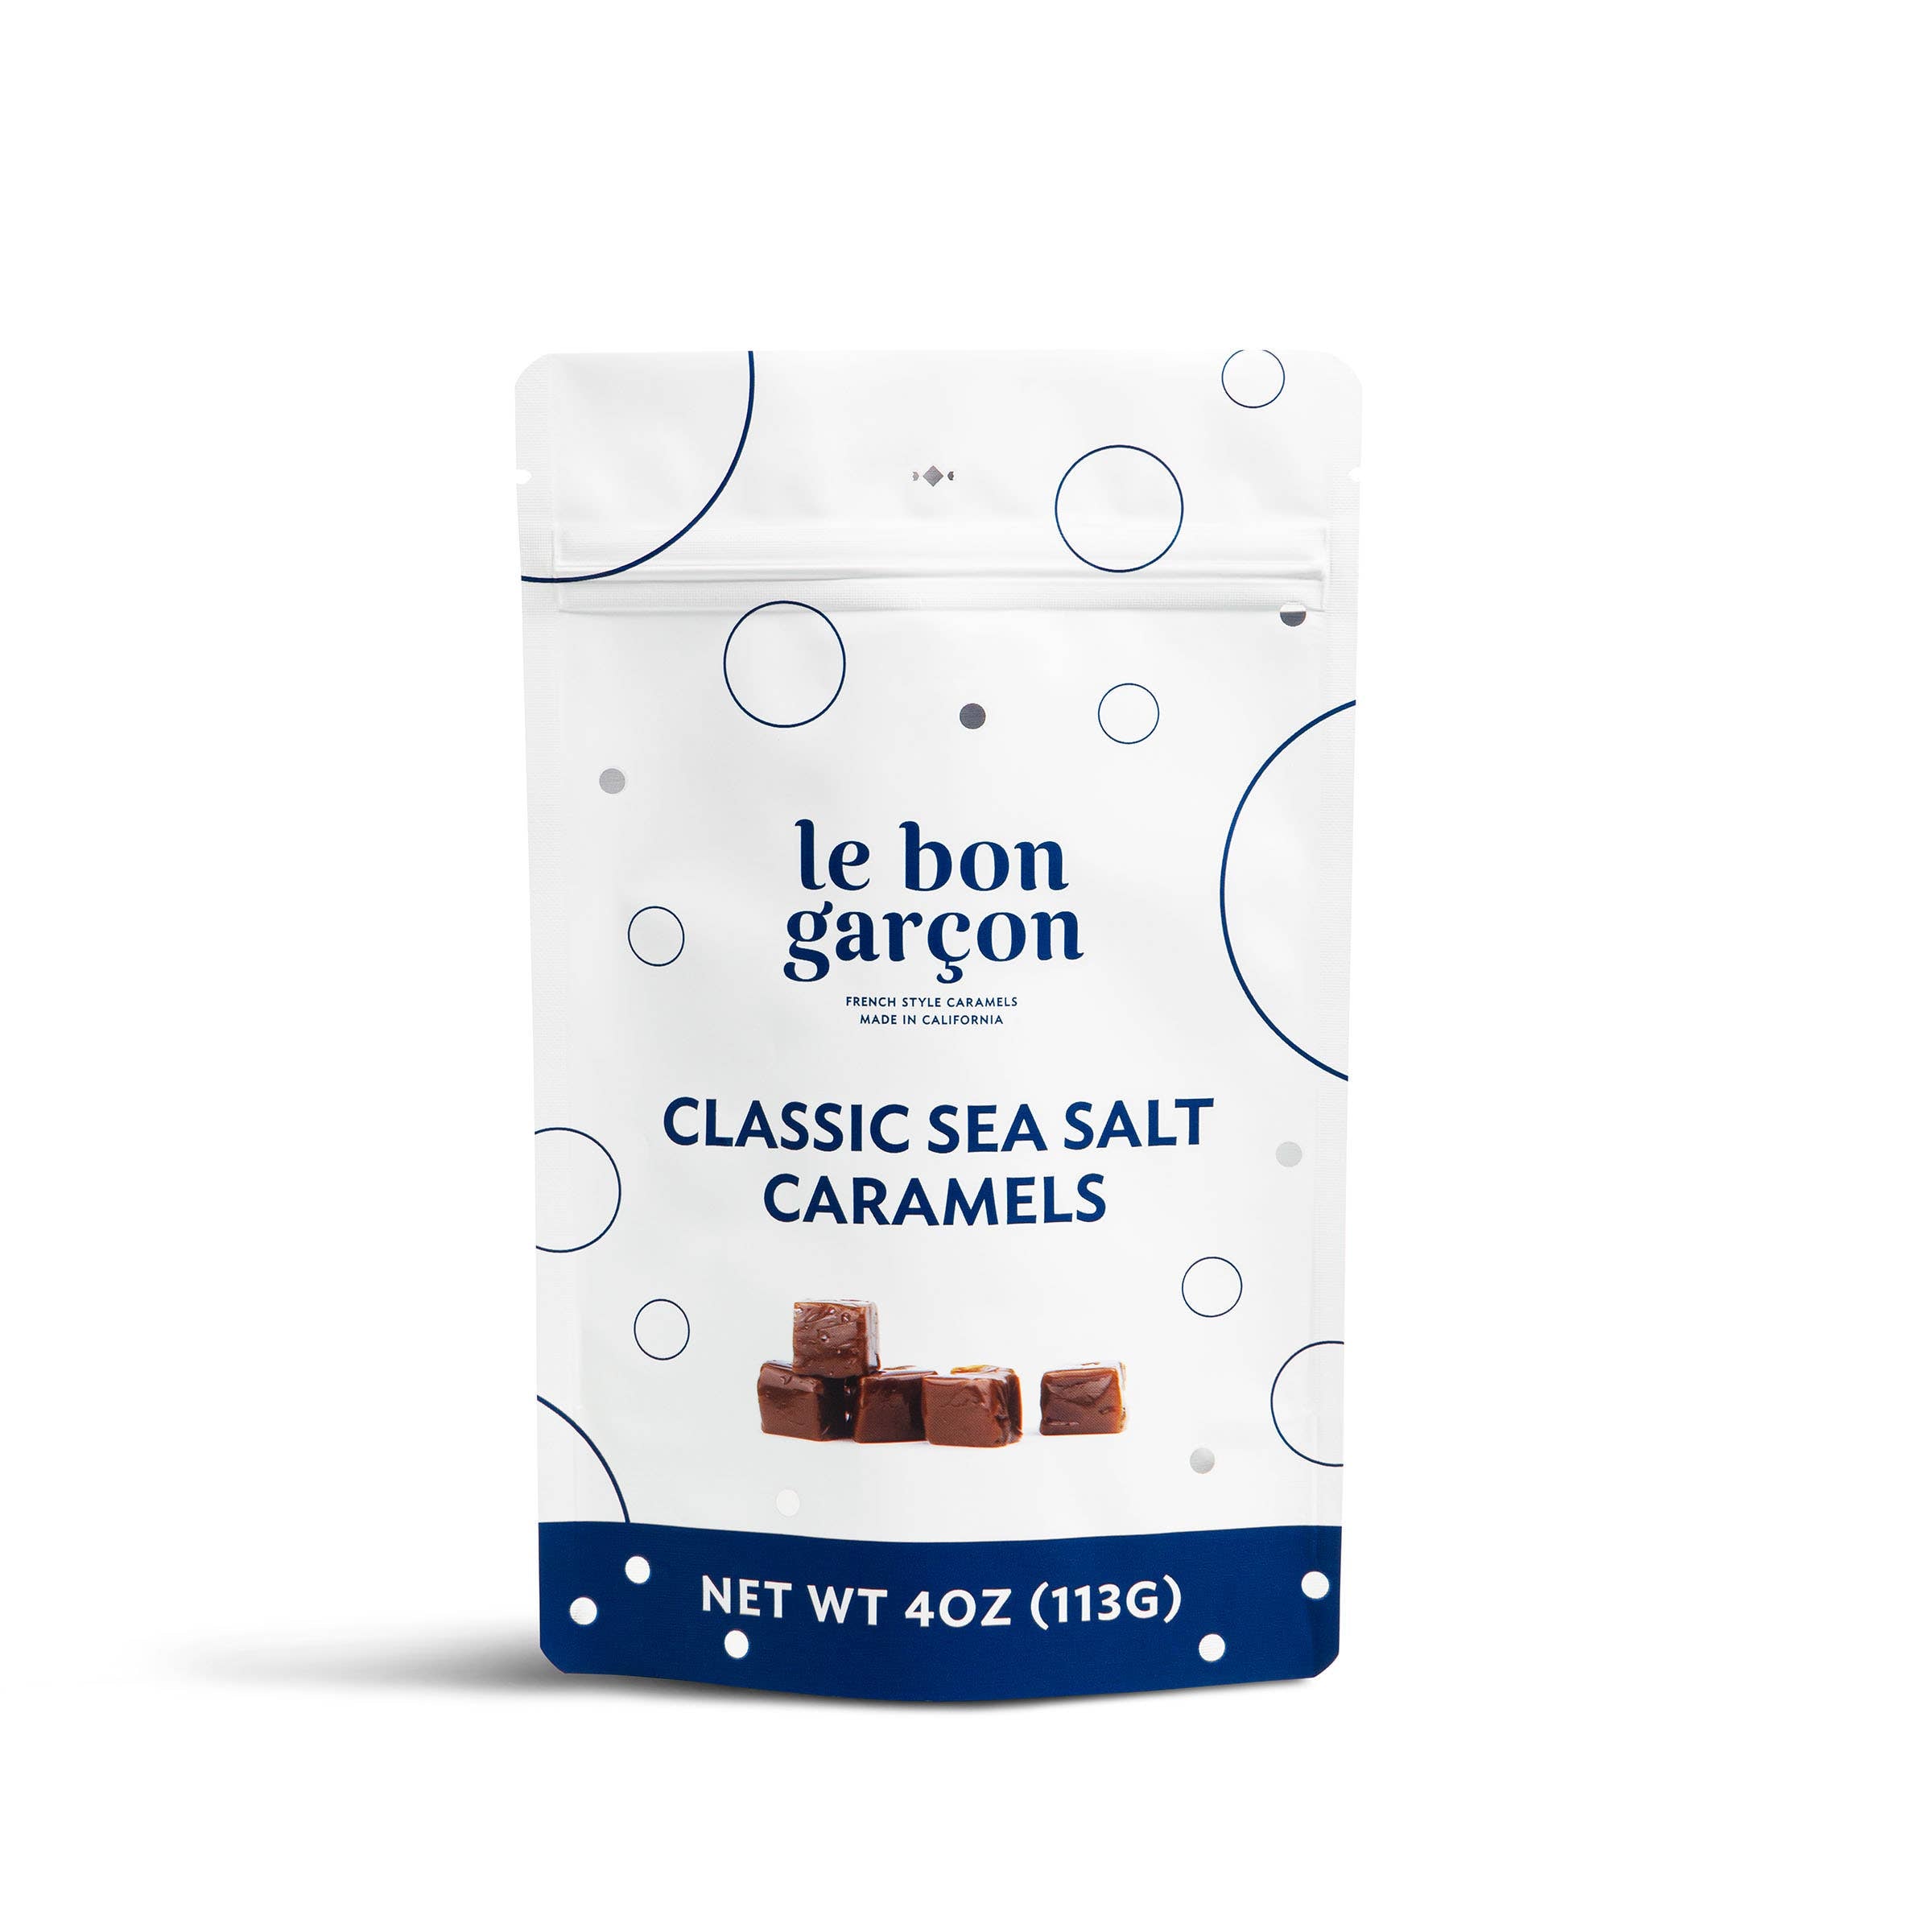 Le Bon Garcon - Classic Sea Salt Caramel - 4 oz Bag